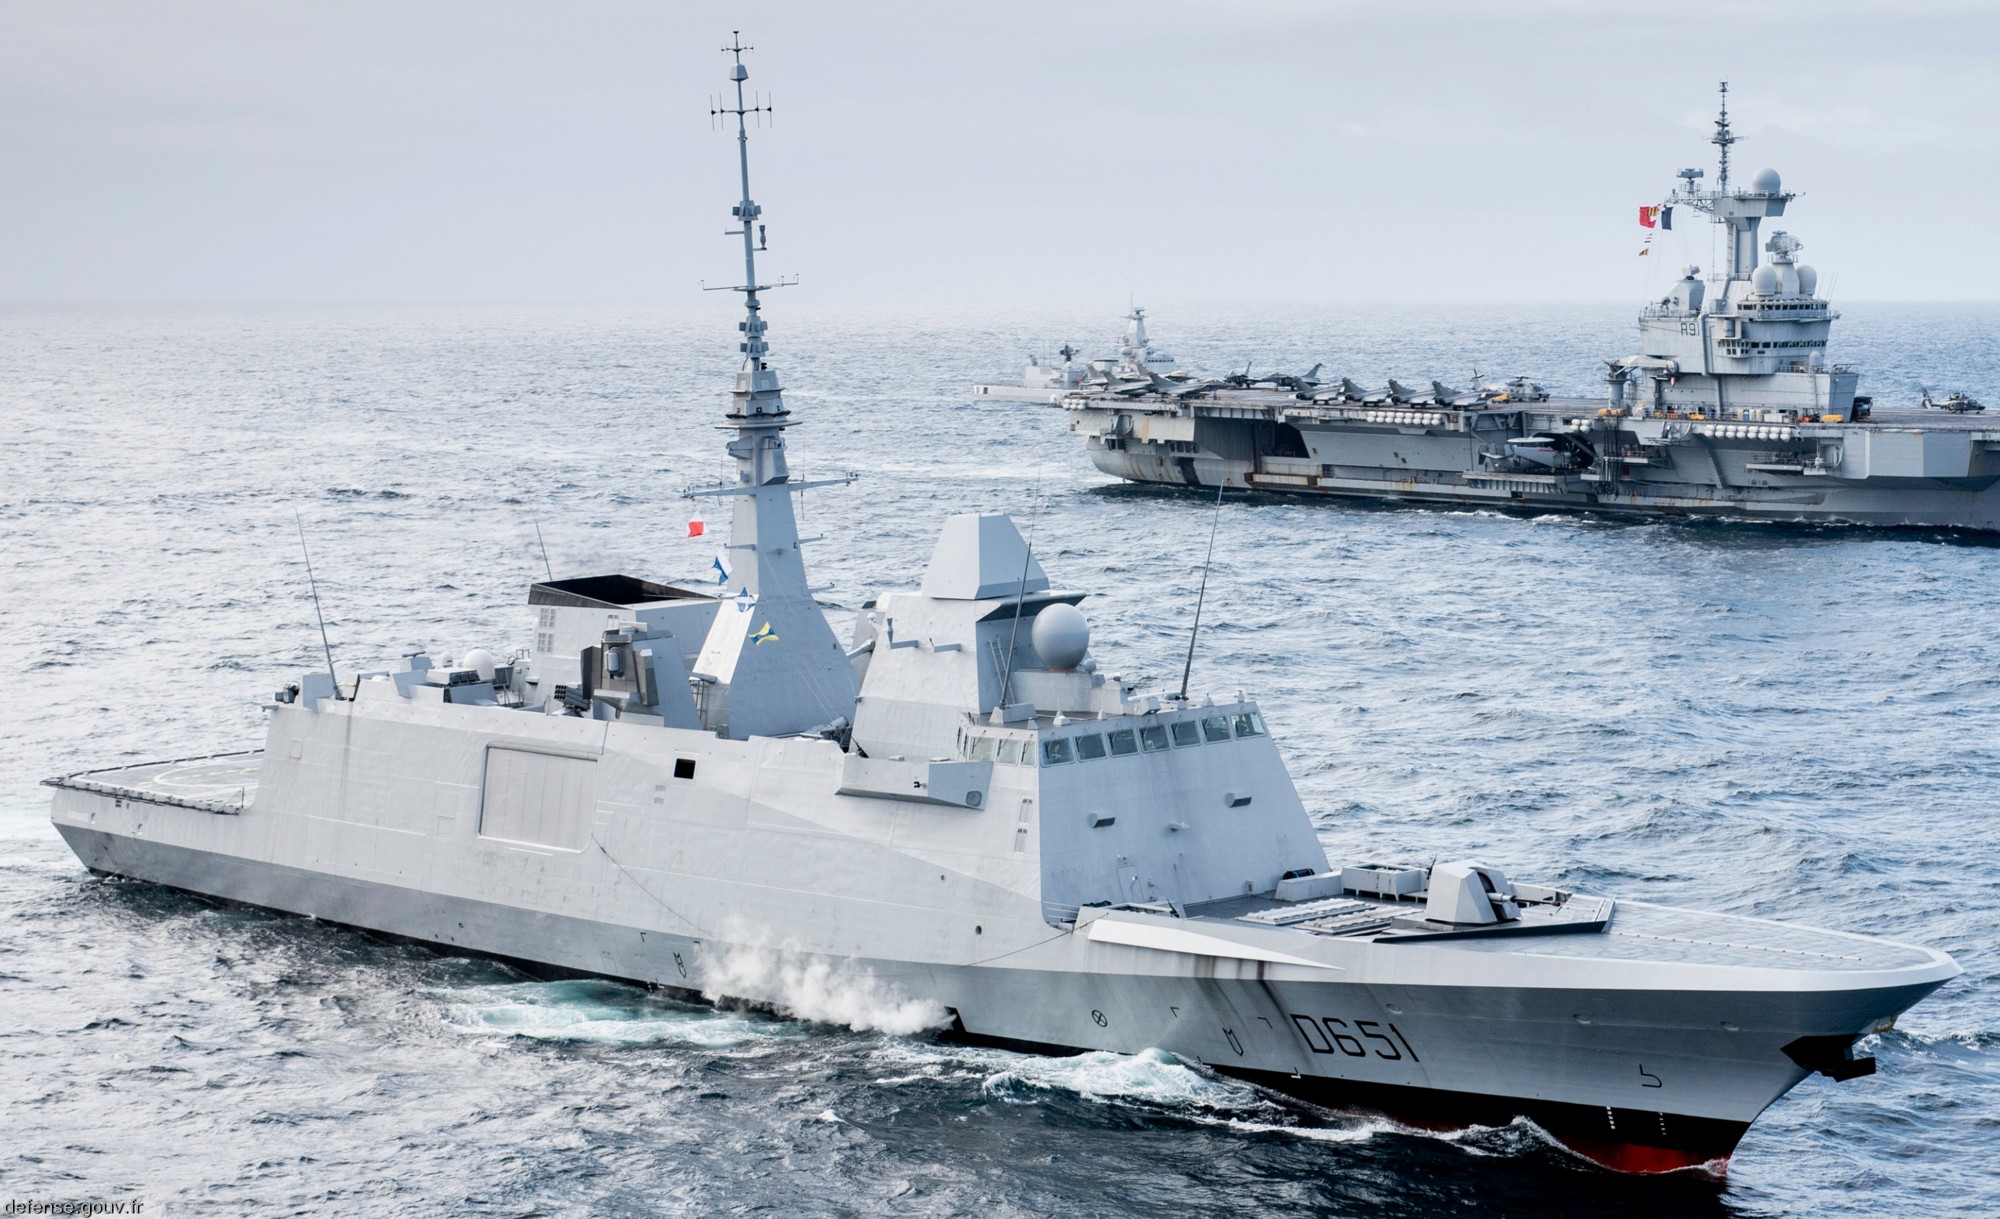 d-651 fs normandie fremm aquitaine class frigate fregate multi purpose french navy marine nationale 21